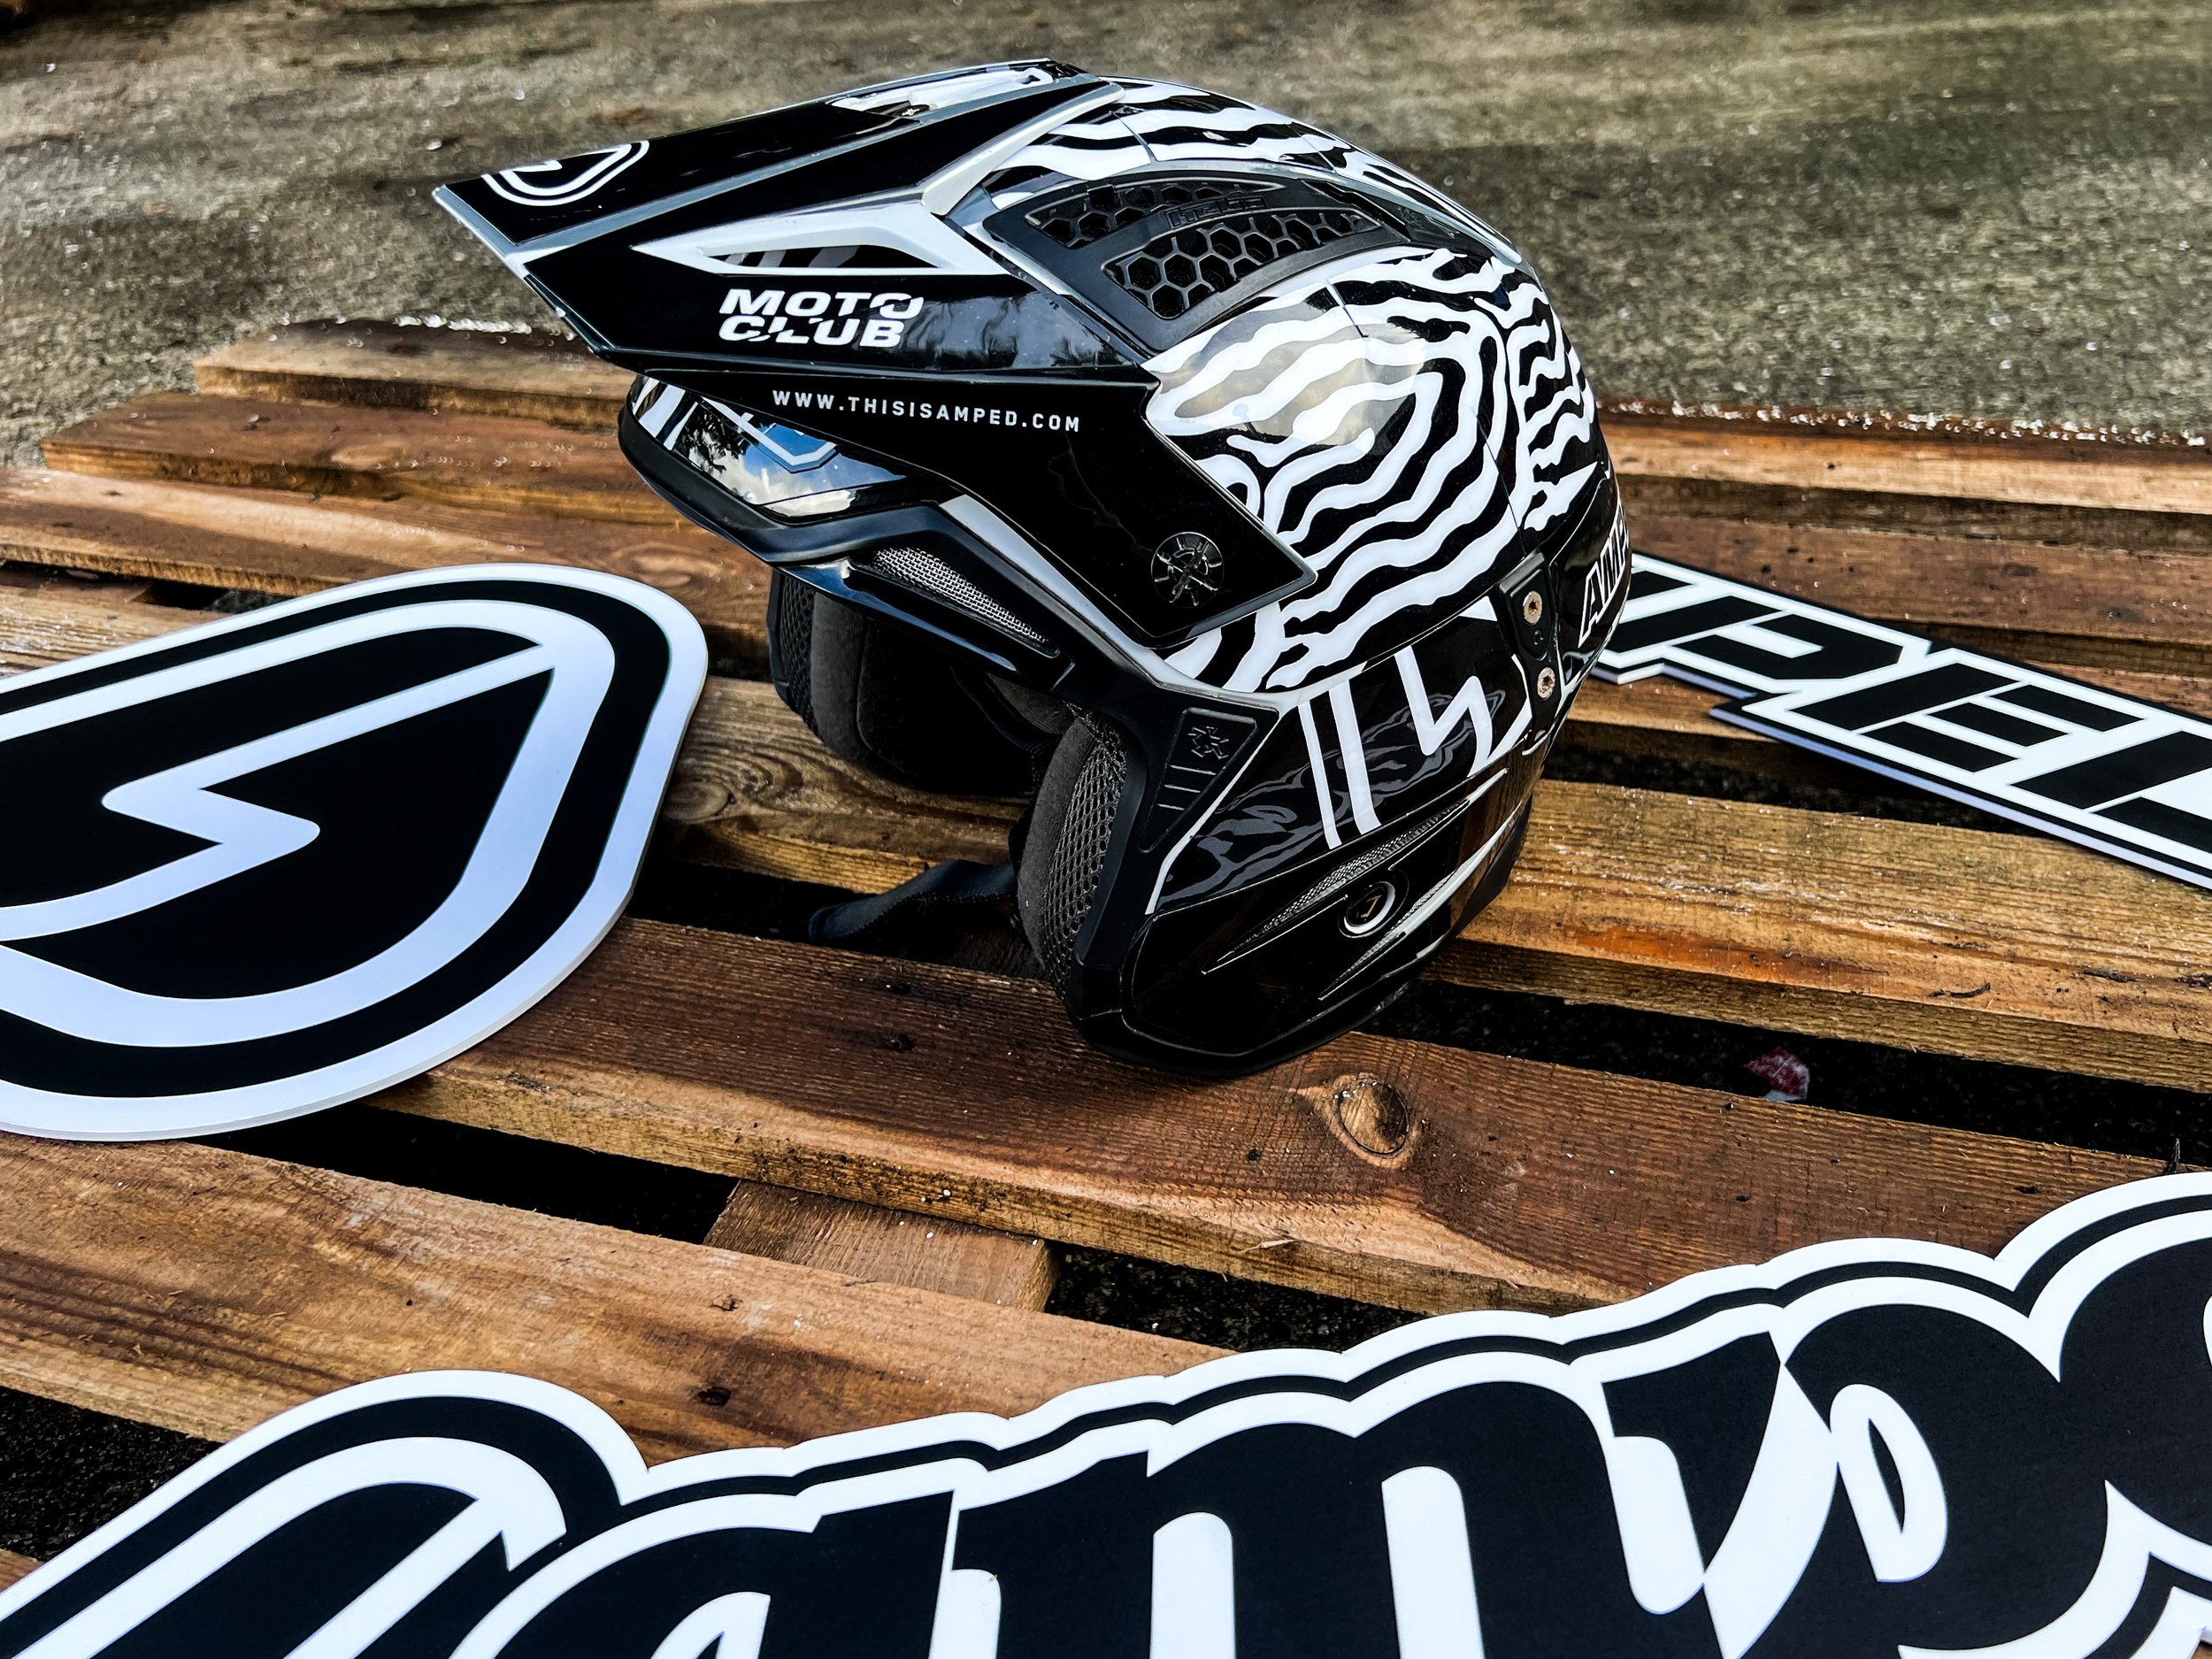  New Product   Amped Zebra Hebo Trials Helmet Stickers    Shop now   